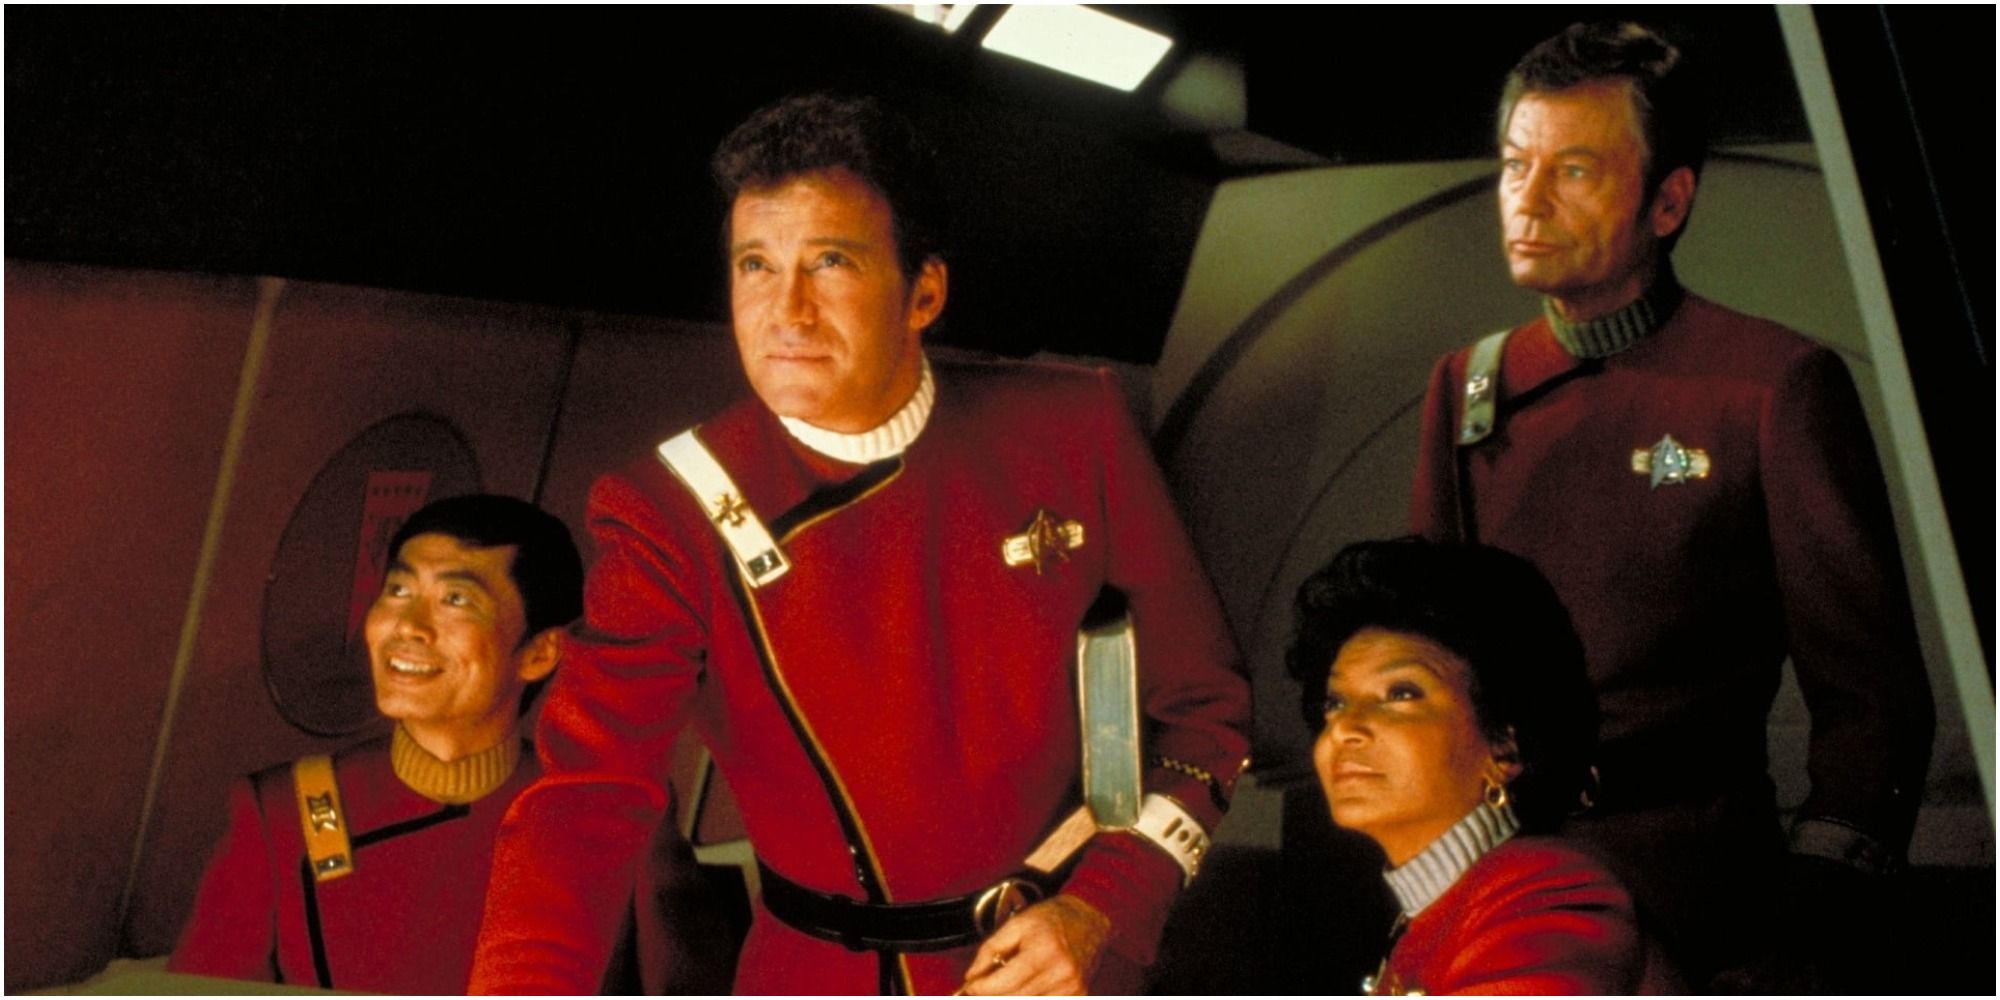 Gene Roddenberrys Original Star Trek 2 Pitch Would Have Ruined Wrath Of Khan